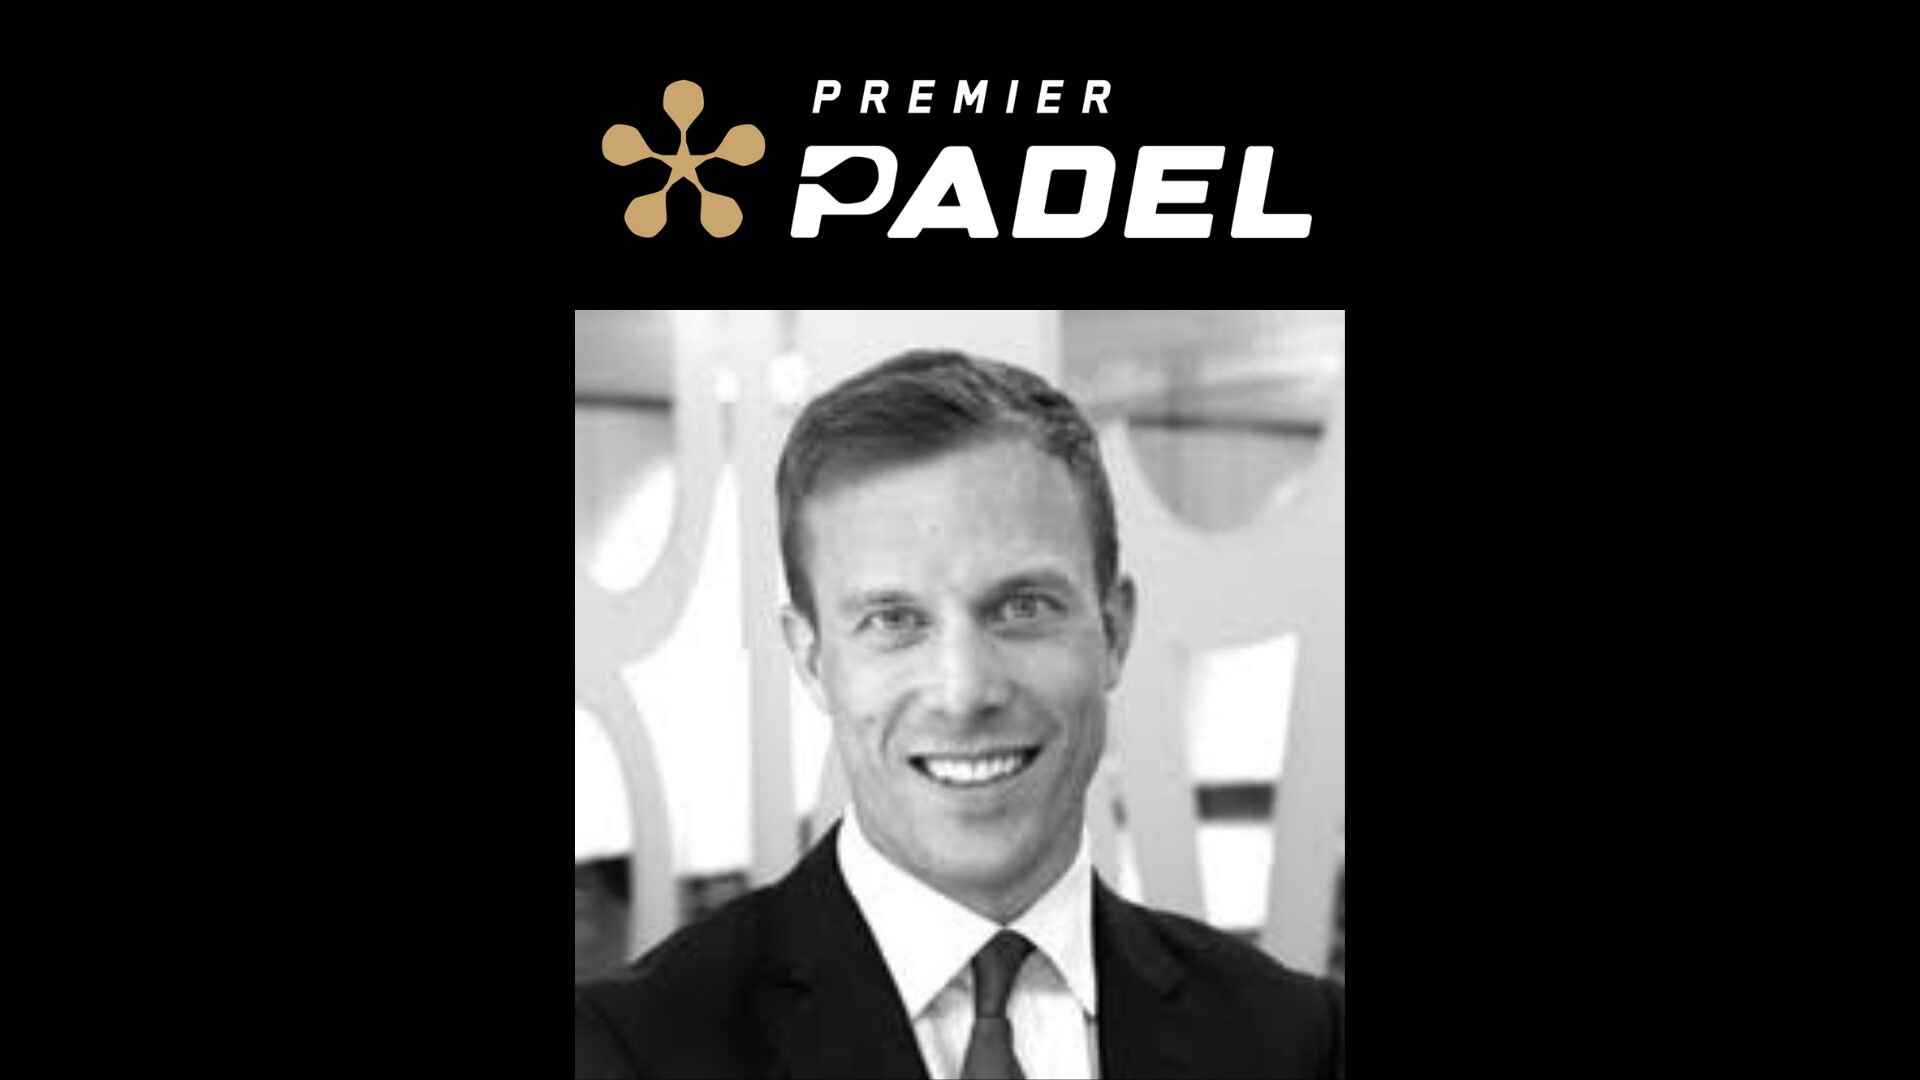 大卫·萨格登 (David Sugden)，新任首席执行官 Premier Padel !